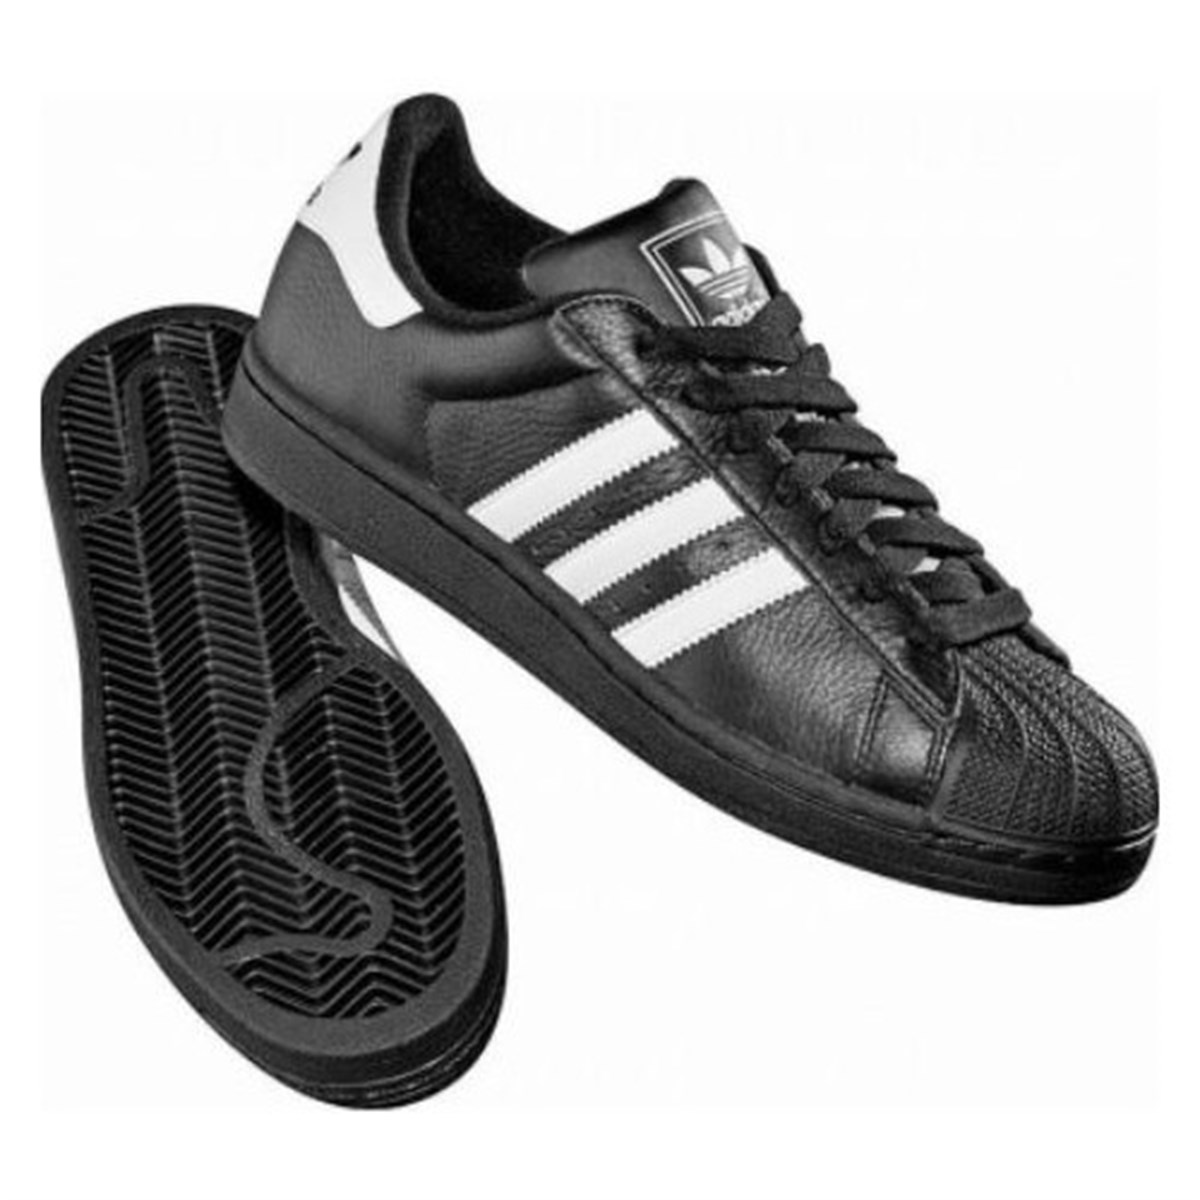 Adidas Nmd R1 V2 Black Retro Casual Running Shoe.